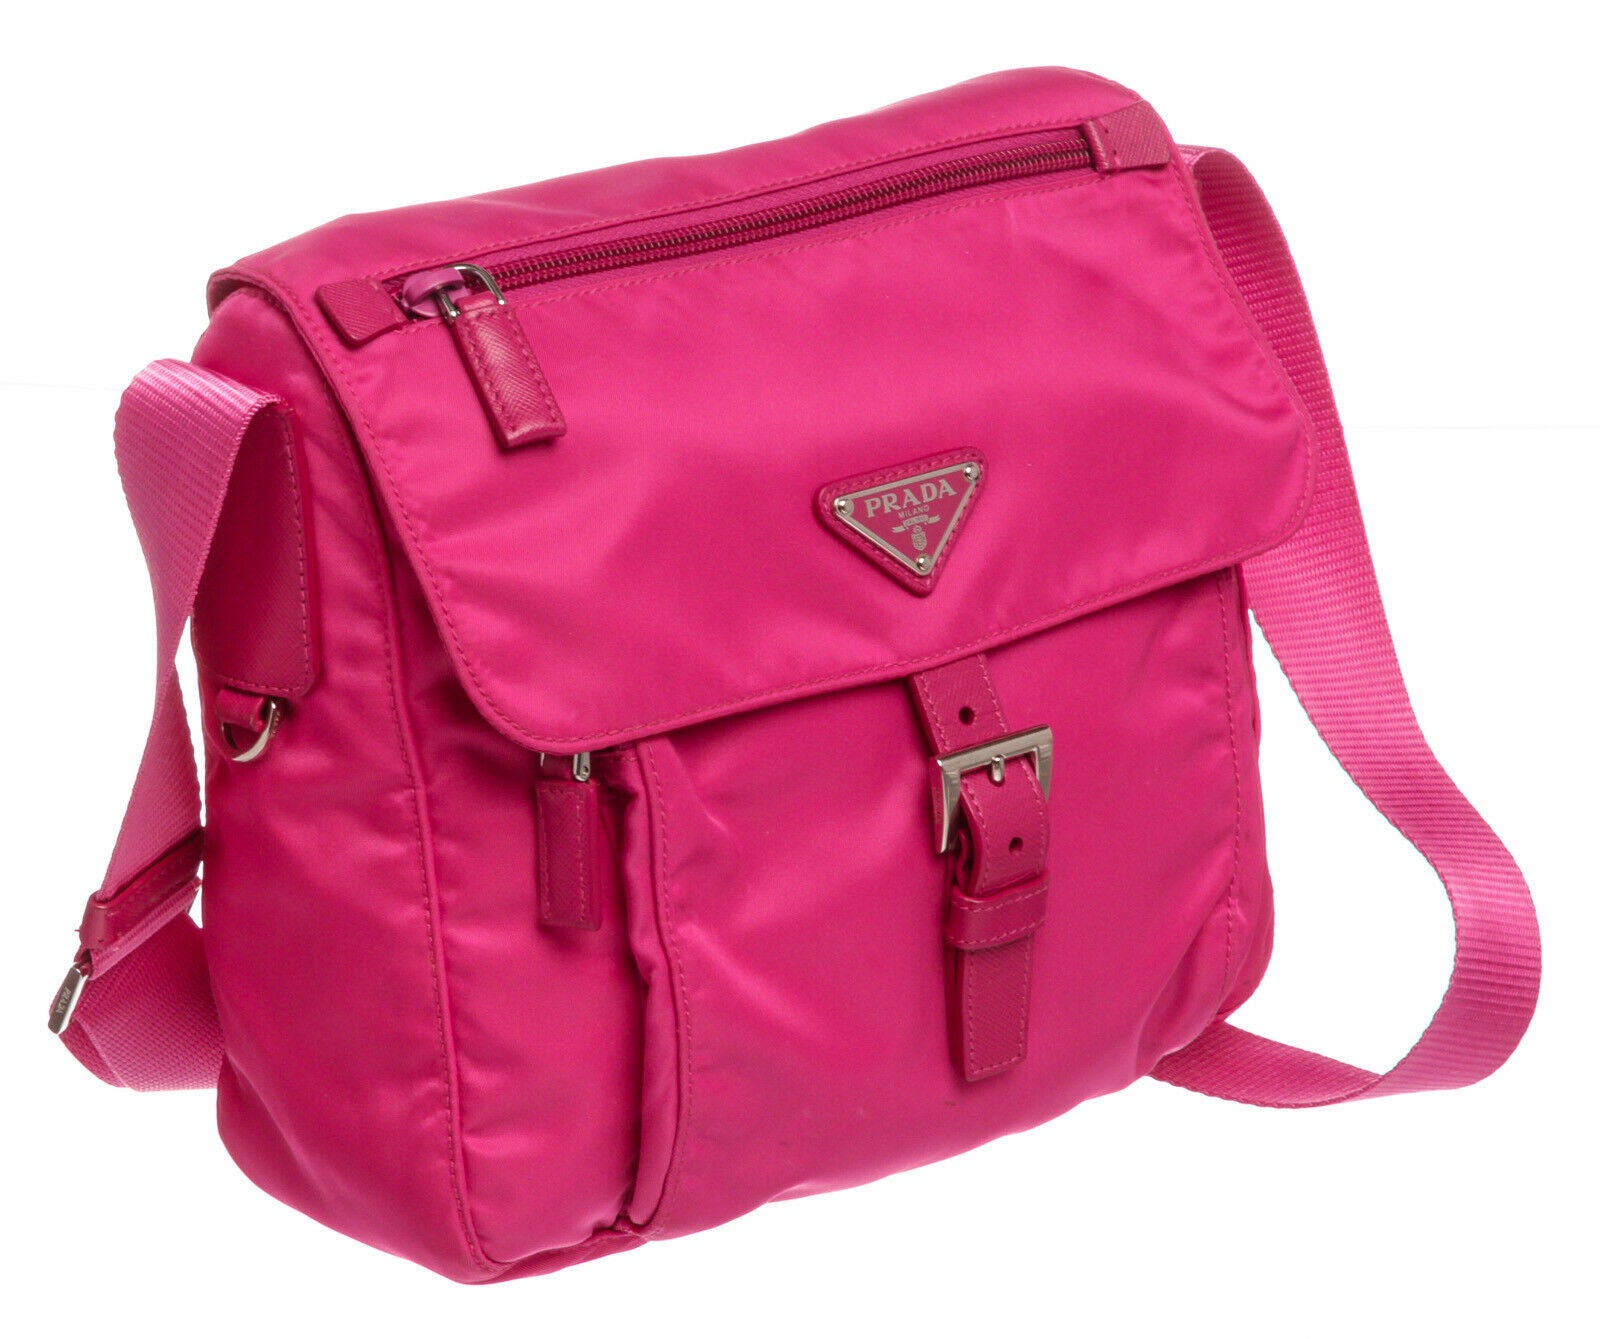 Prada + Pink Nylon/Leather Crossbody Bag